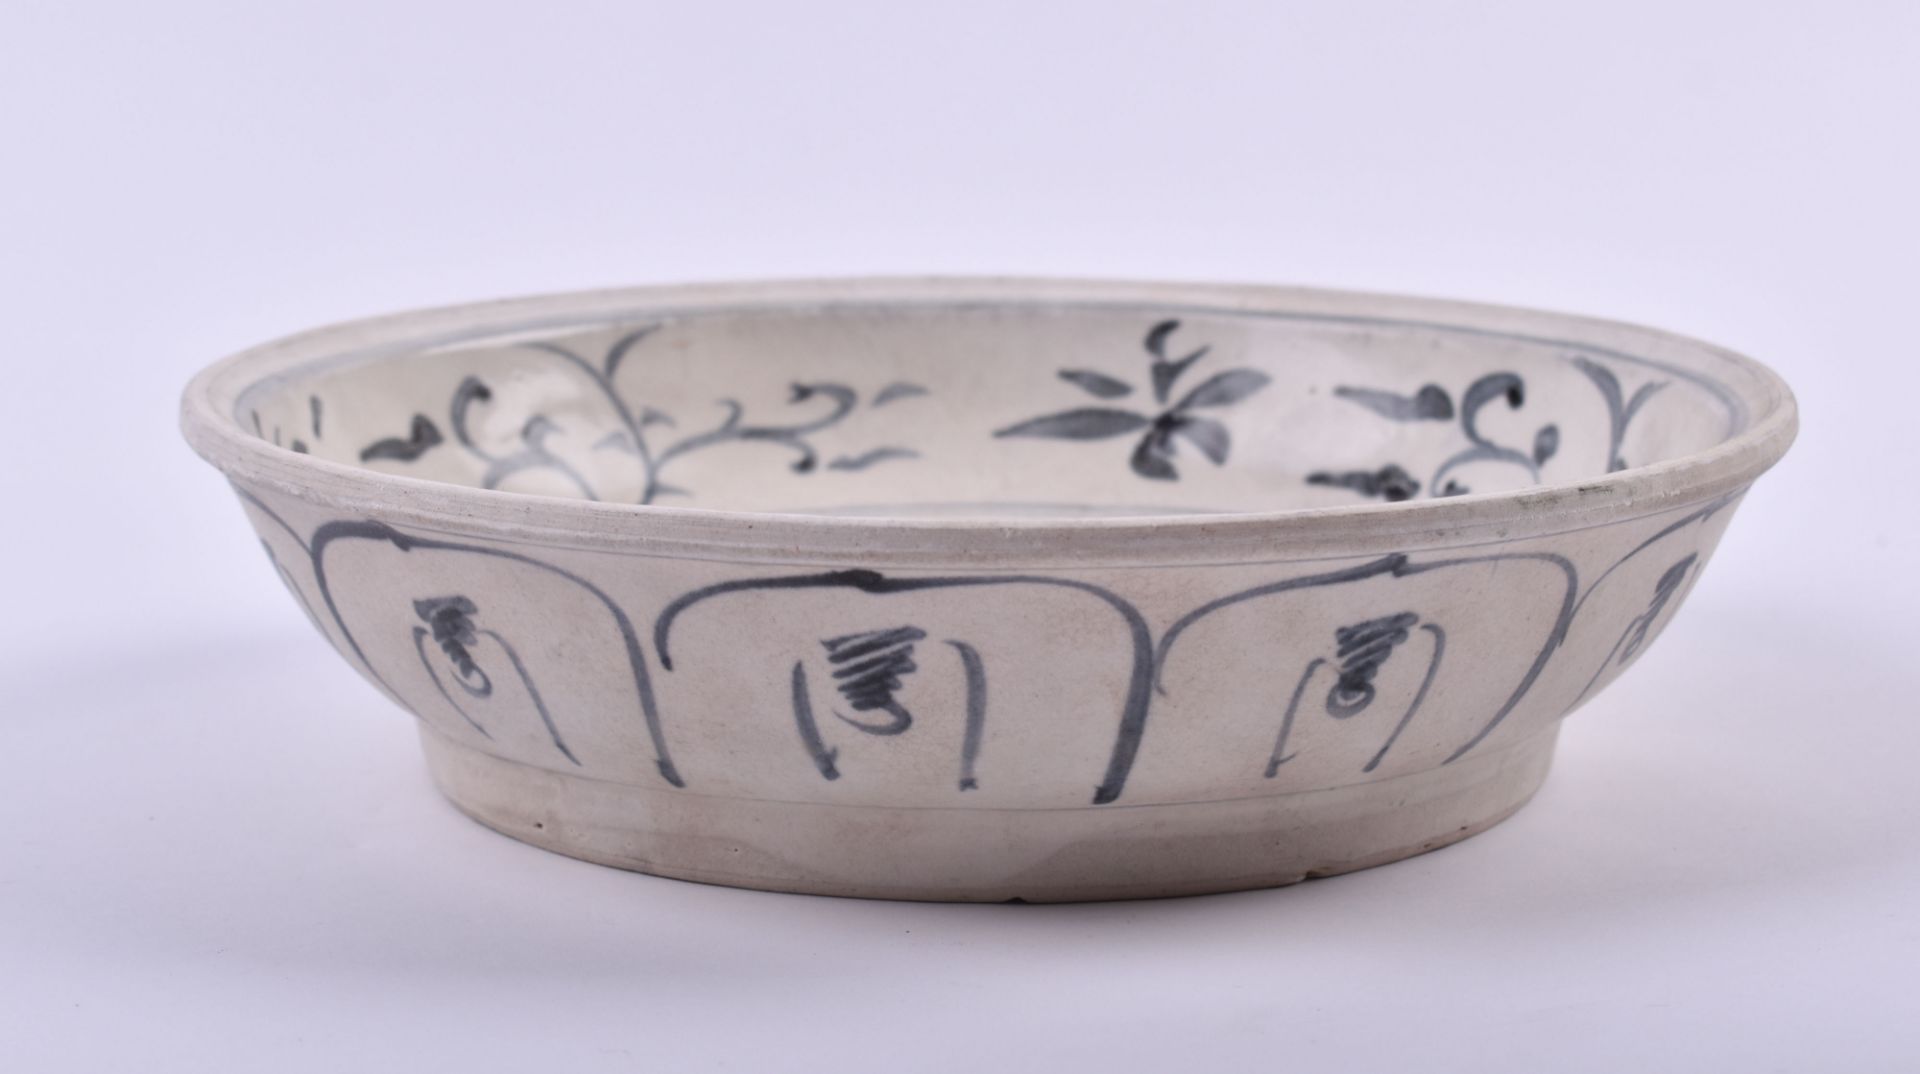  Bowl China Ming dynasty - Image 3 of 8